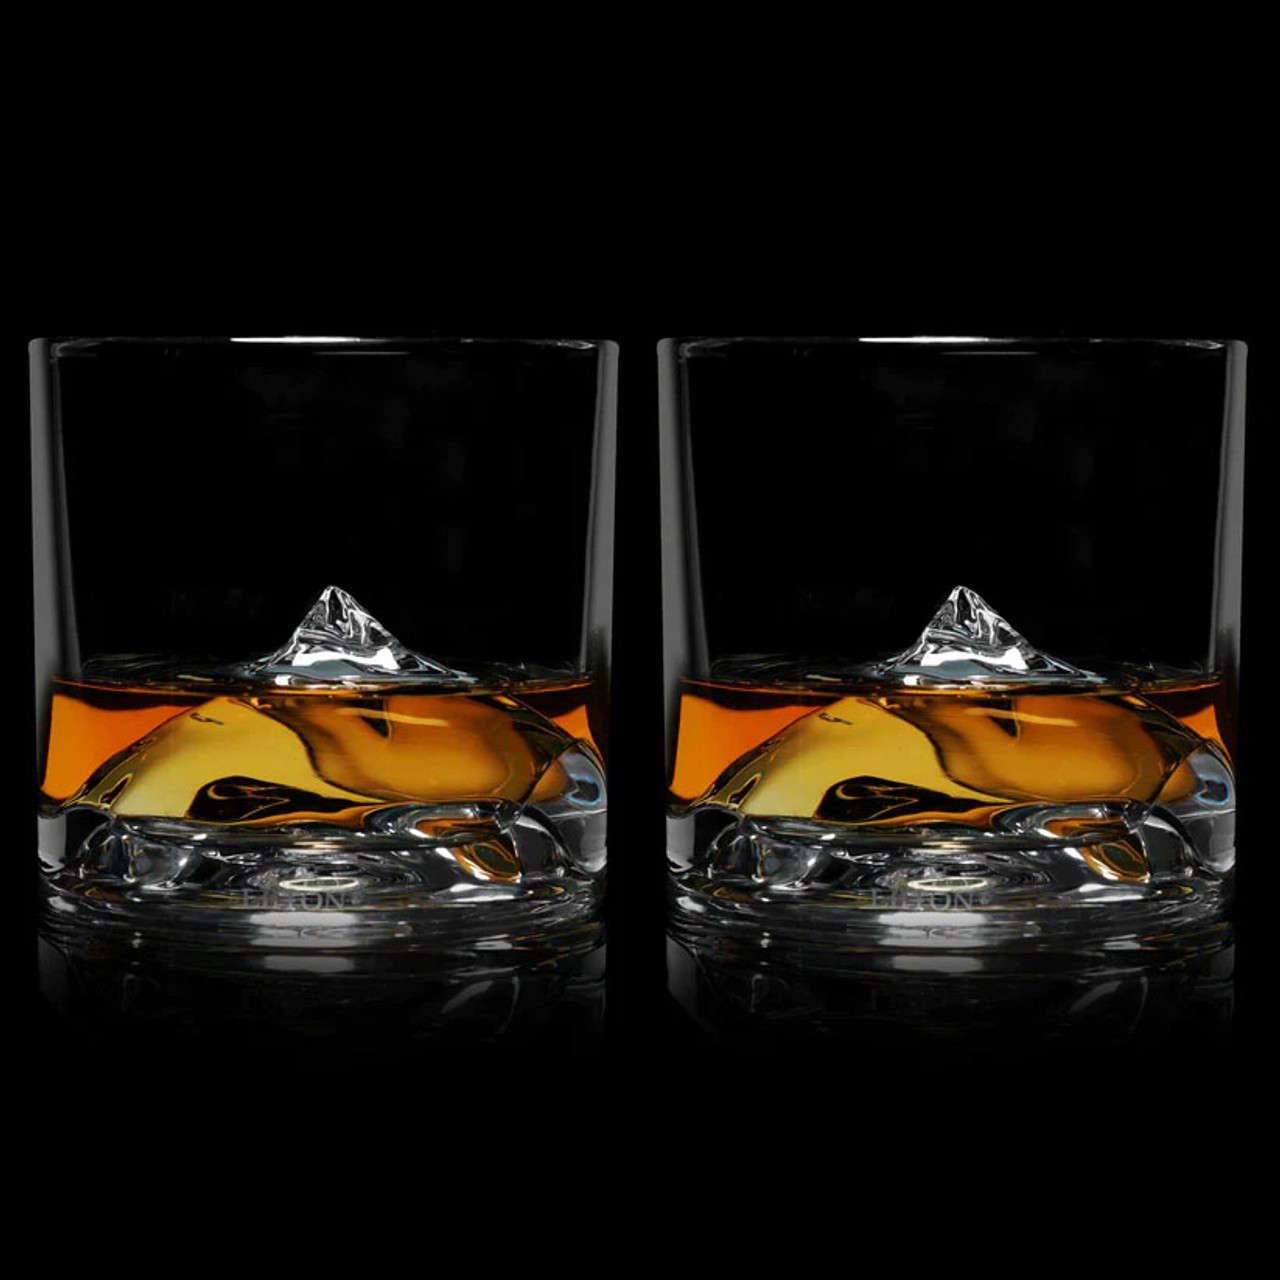 Whiskey glass THE PEAKS, set of 4 pcs, Liiton 